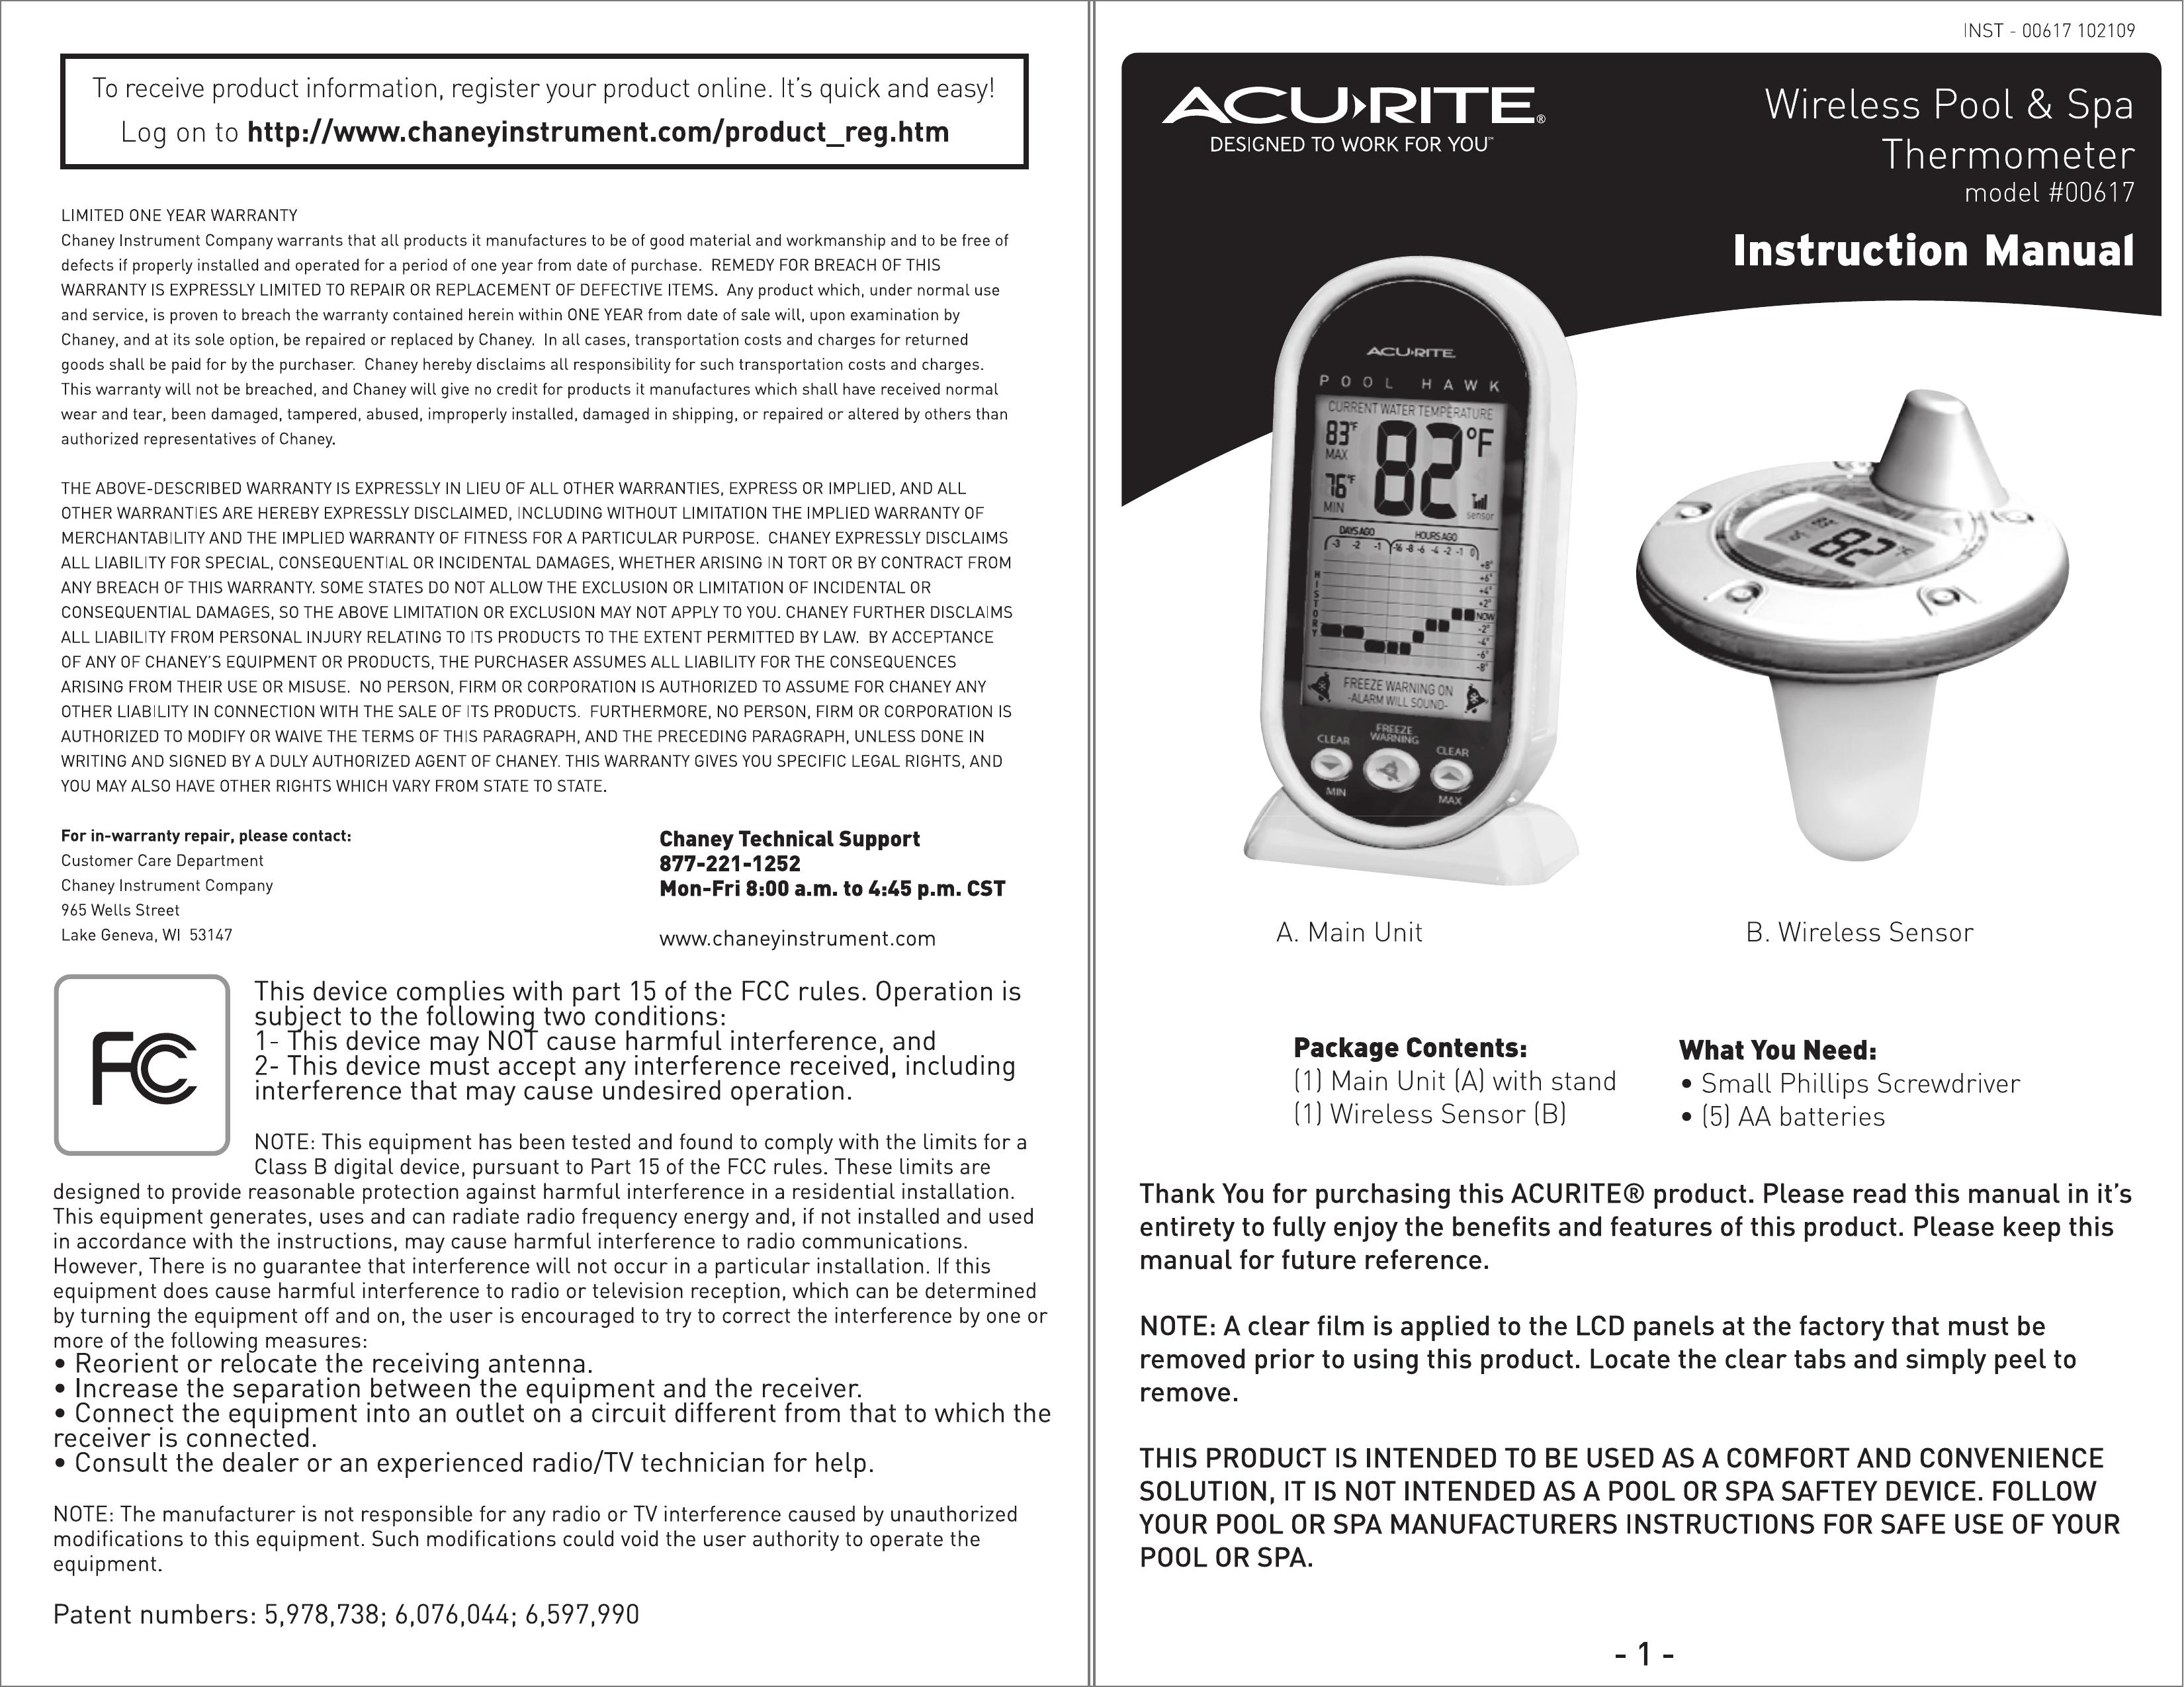 Acu-Rite 617 Thermometer User Manual